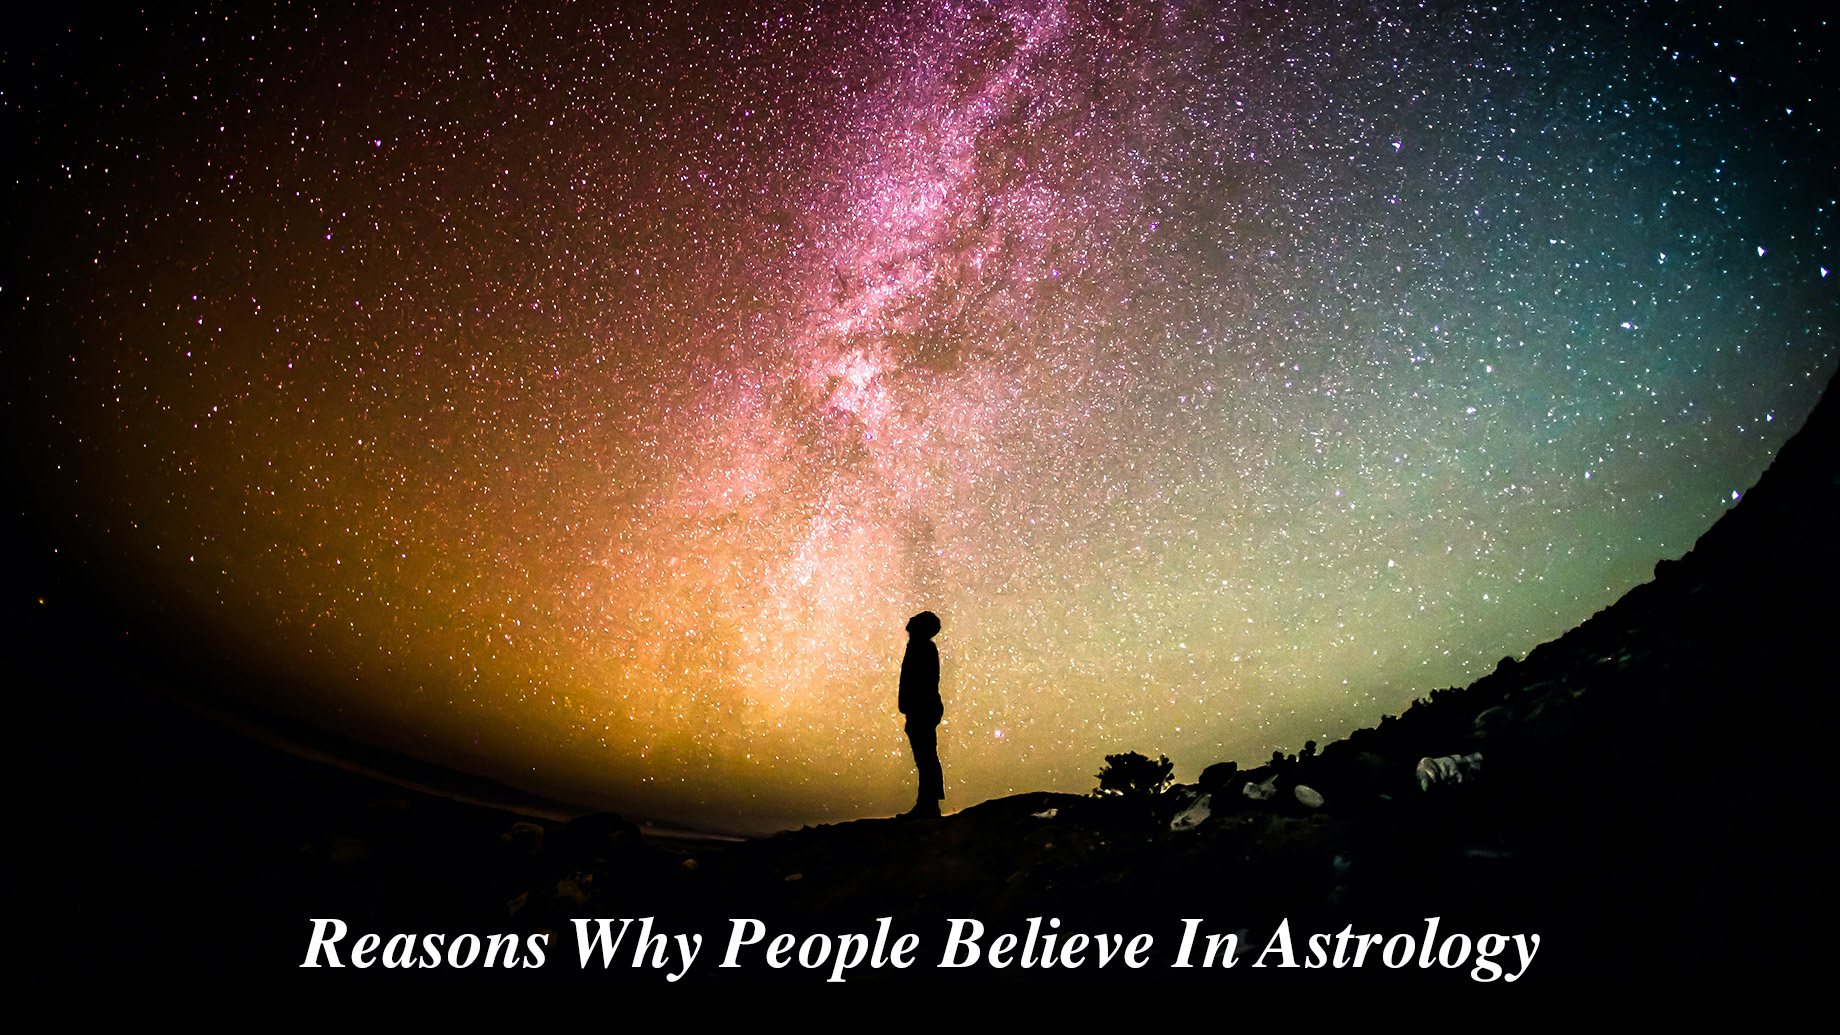 Reasons Why People Believe In Astrology